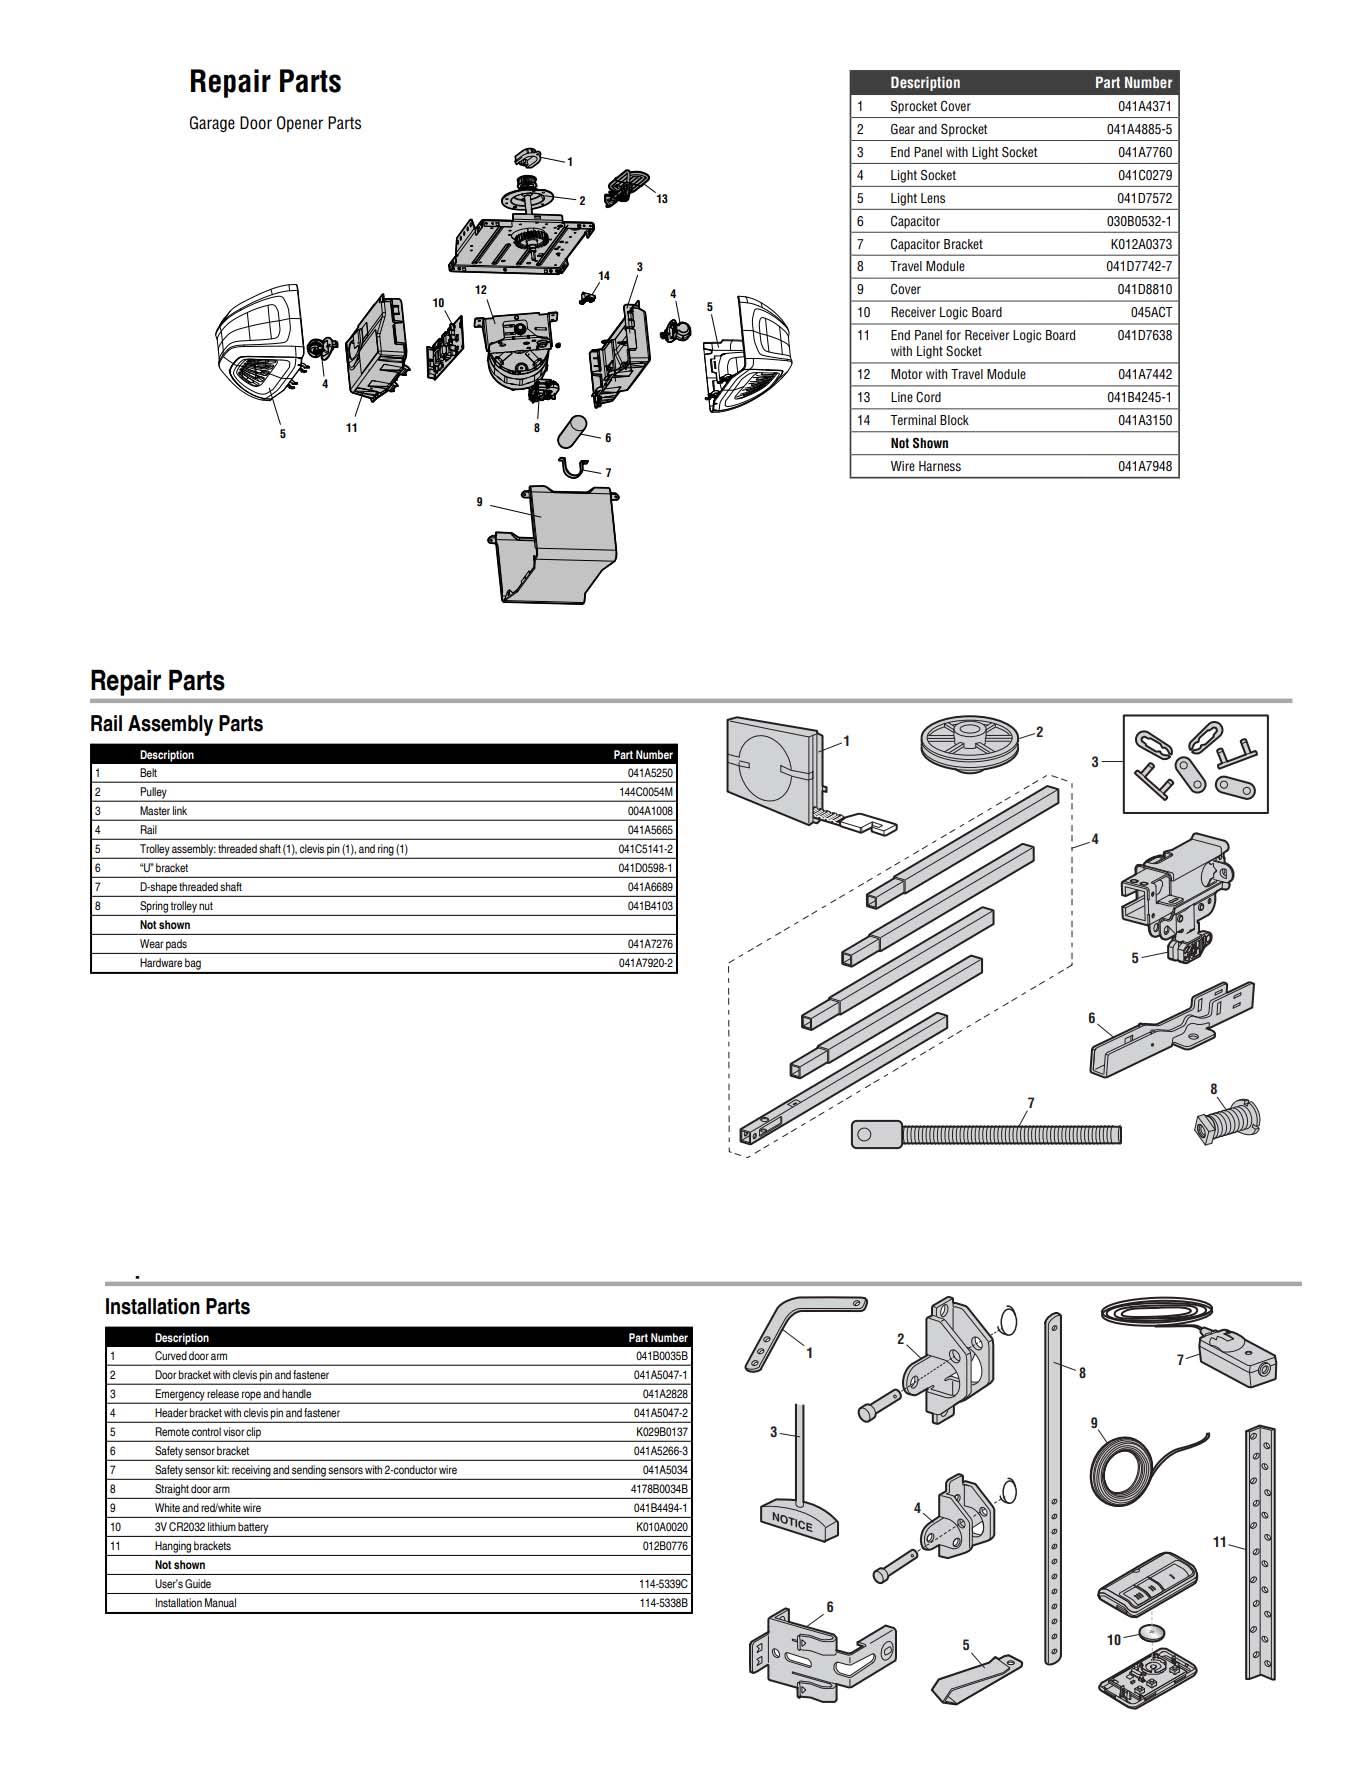 Chamberlain B500, B503 and B510 Garage Door Opener Parts Diagram and List